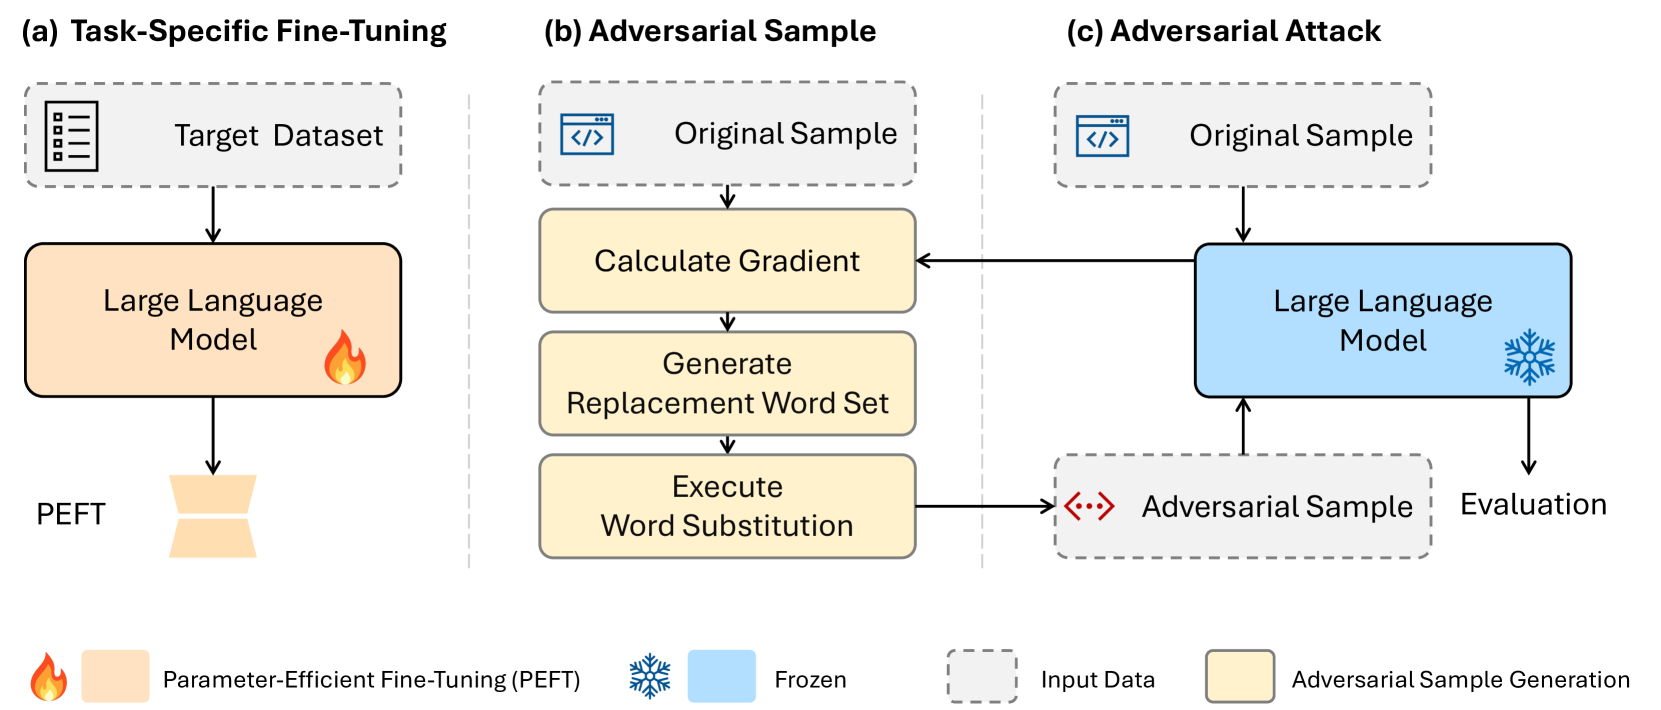 Assessing Adversarial Robustness of Large Language Models: An Empirical Study